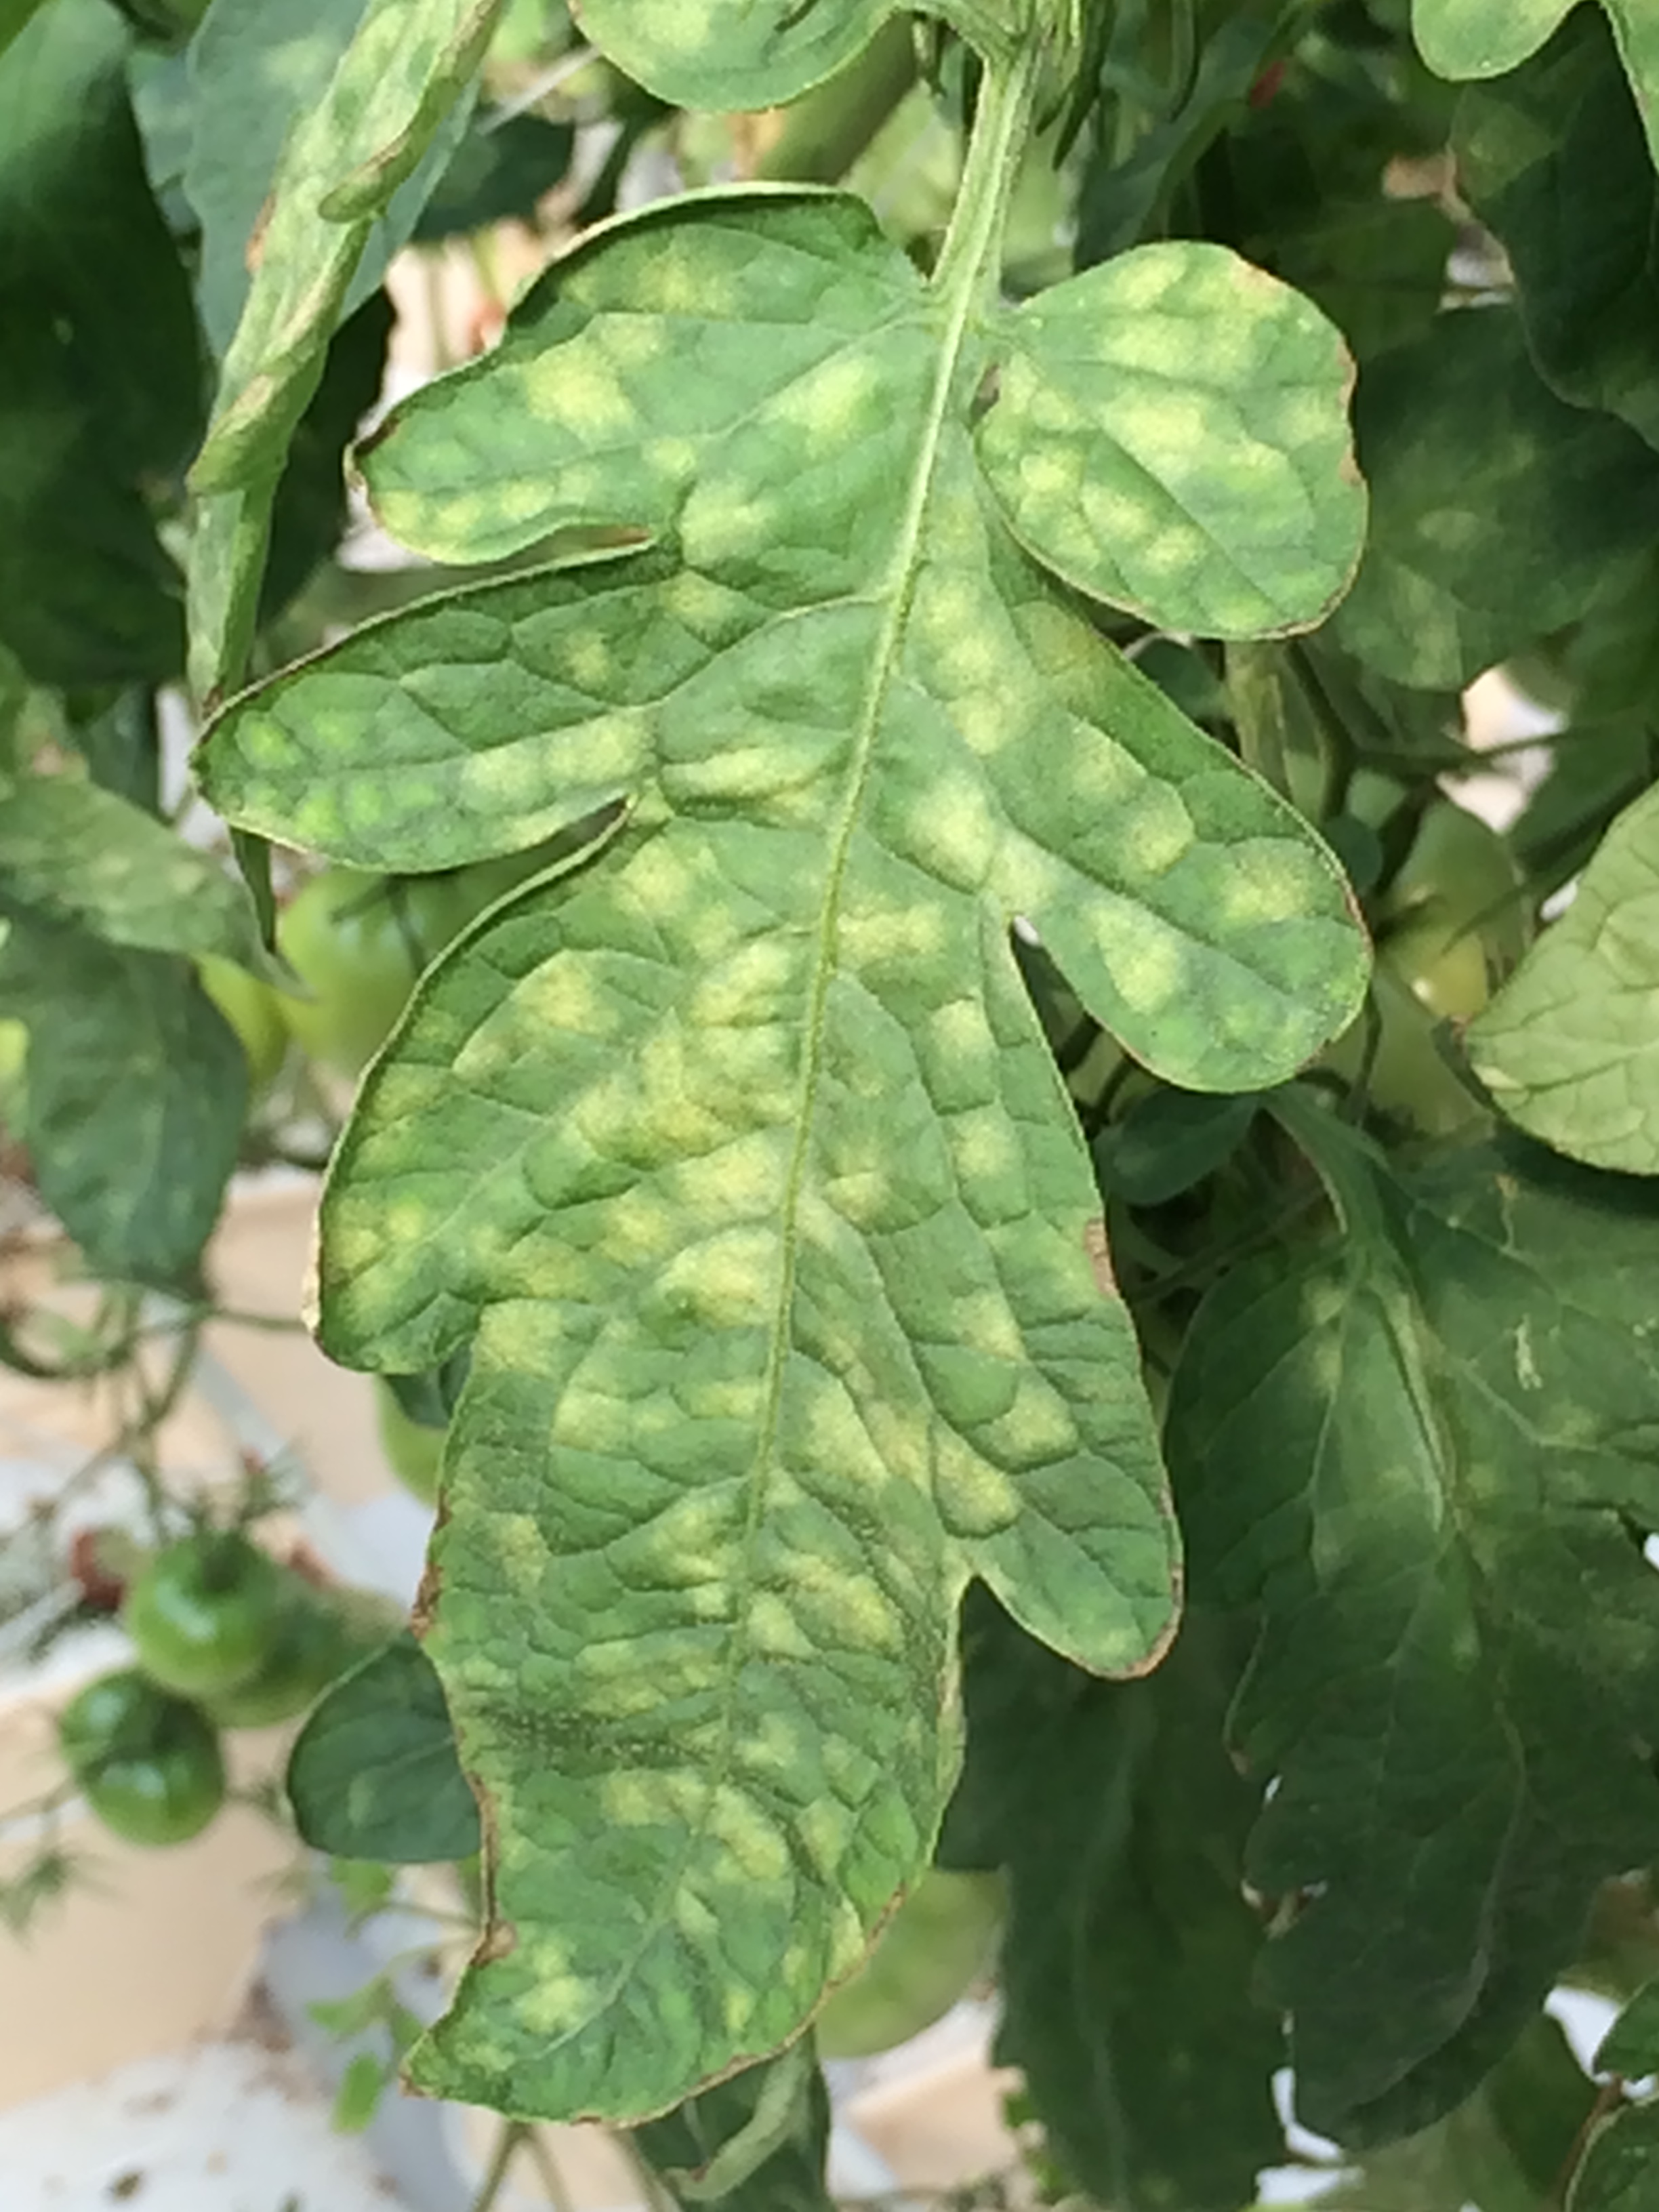 Symptoms of leaf mold on a tomato leaflet.